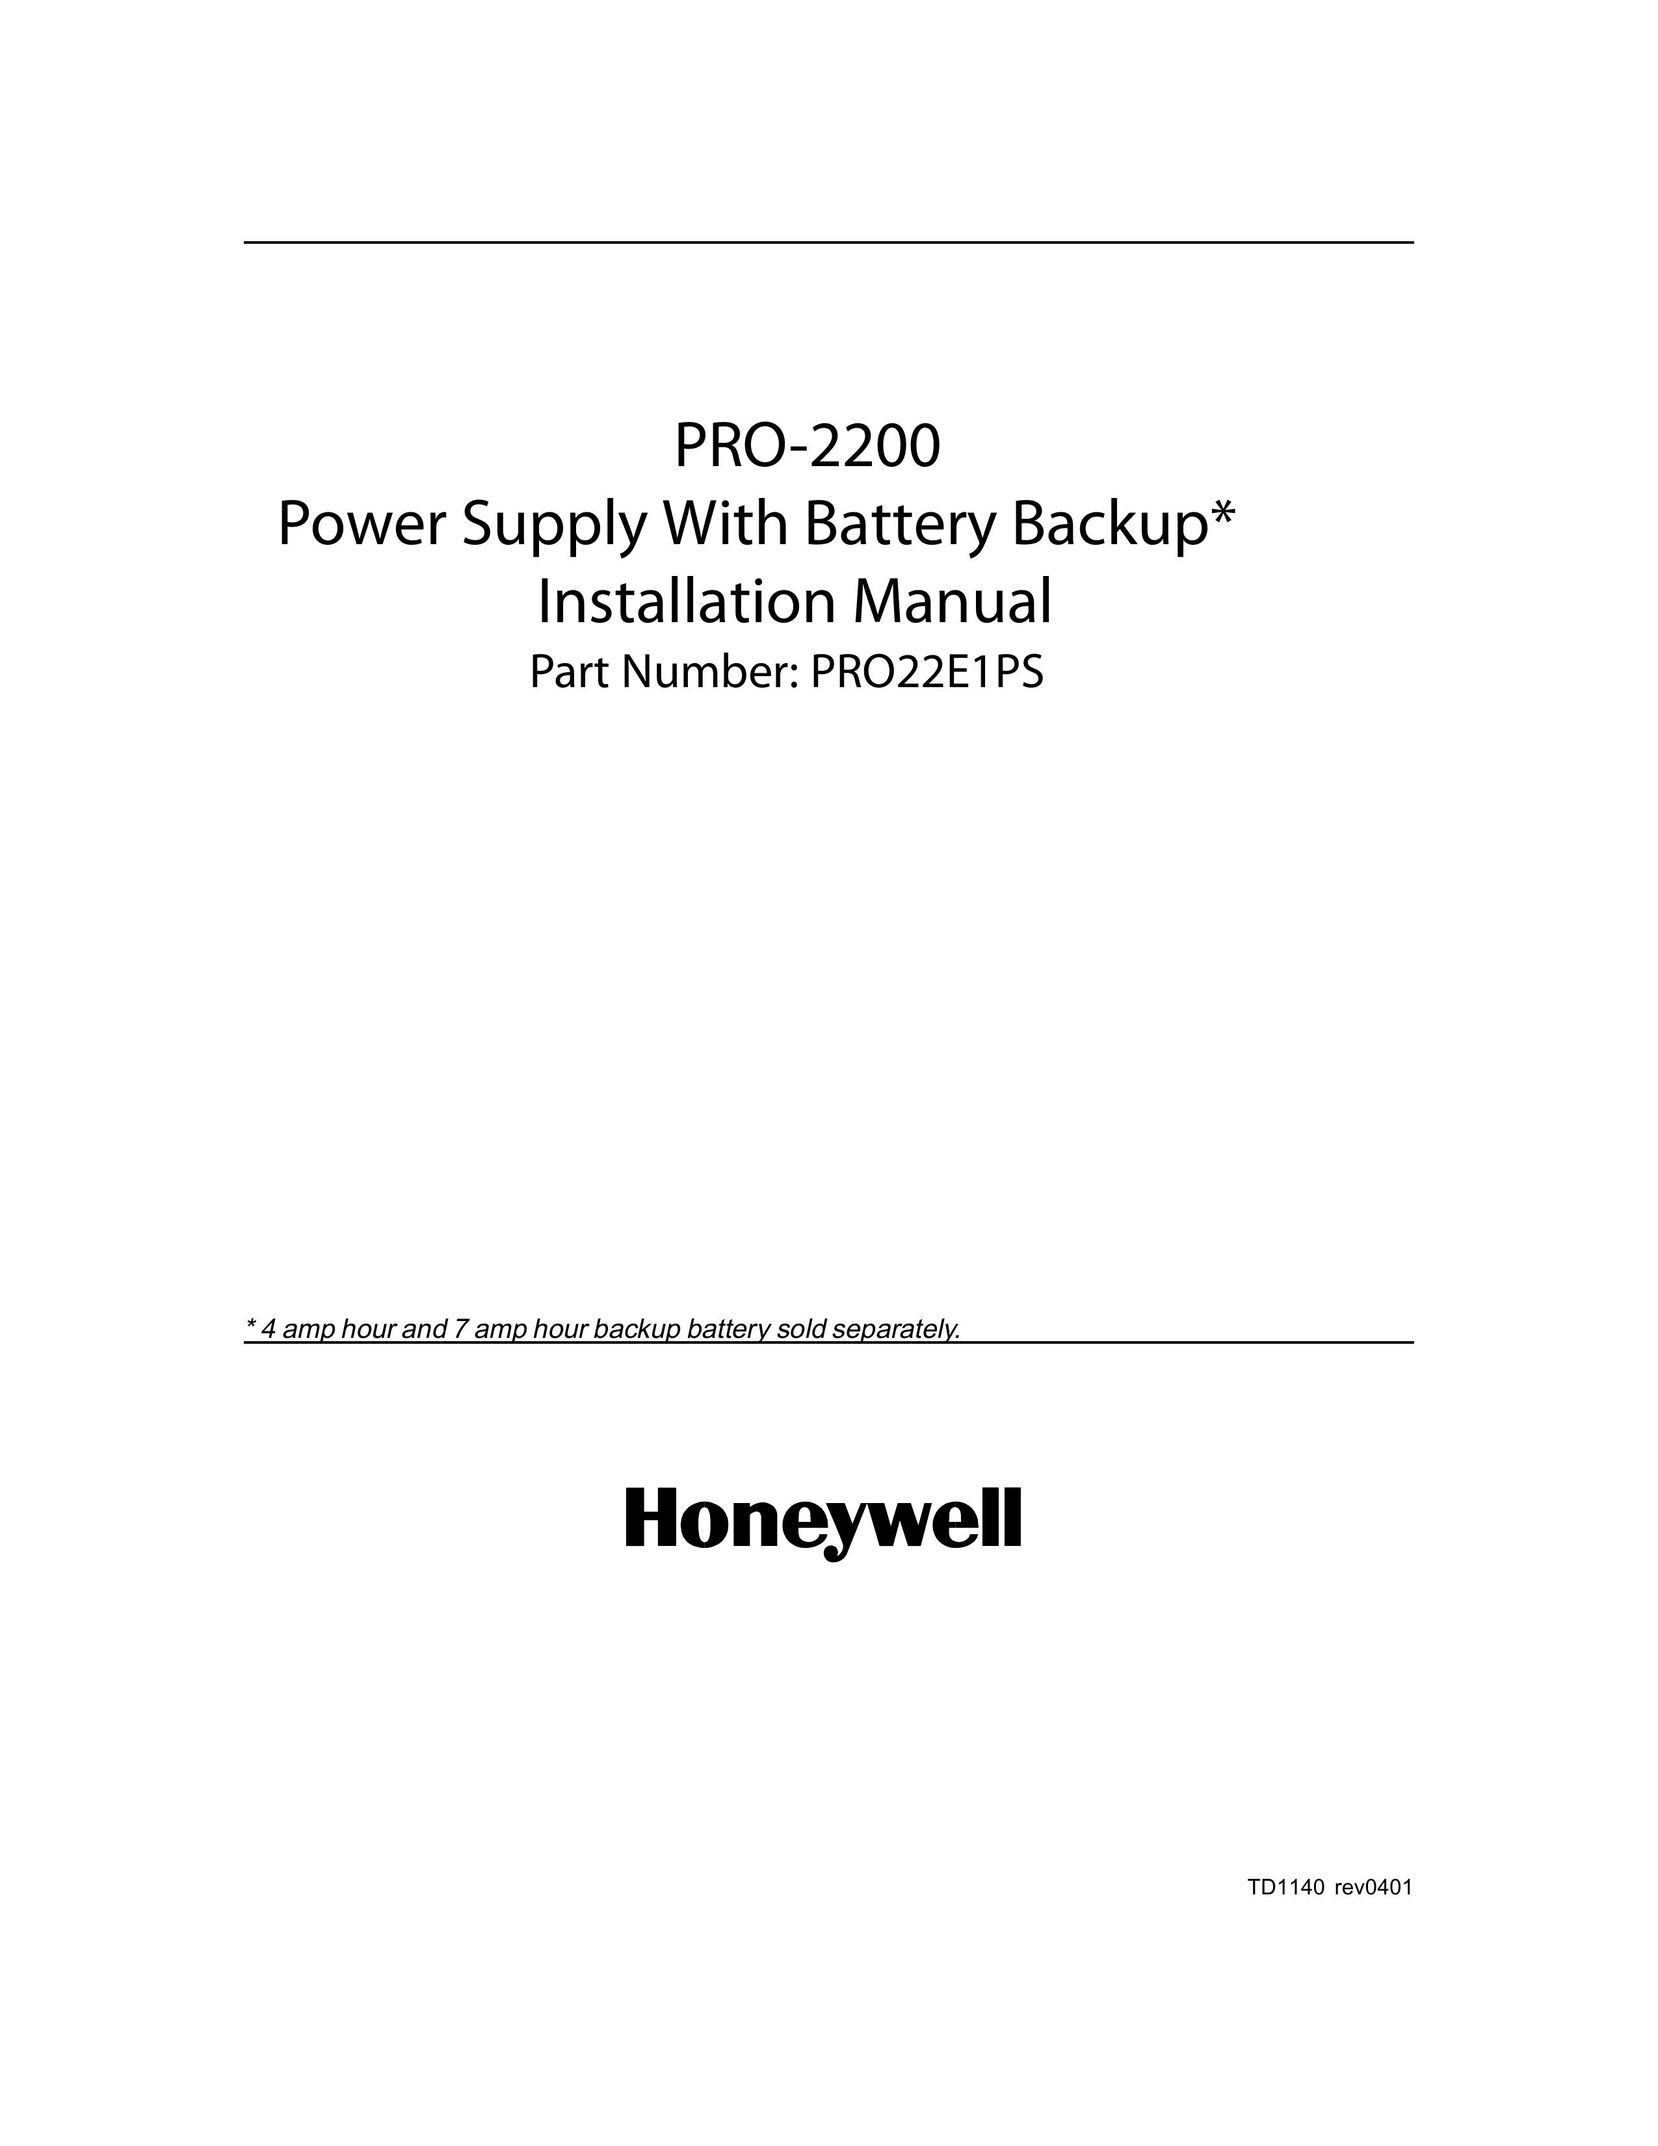 Honeywell PRO-2200 Power Supply User Manual